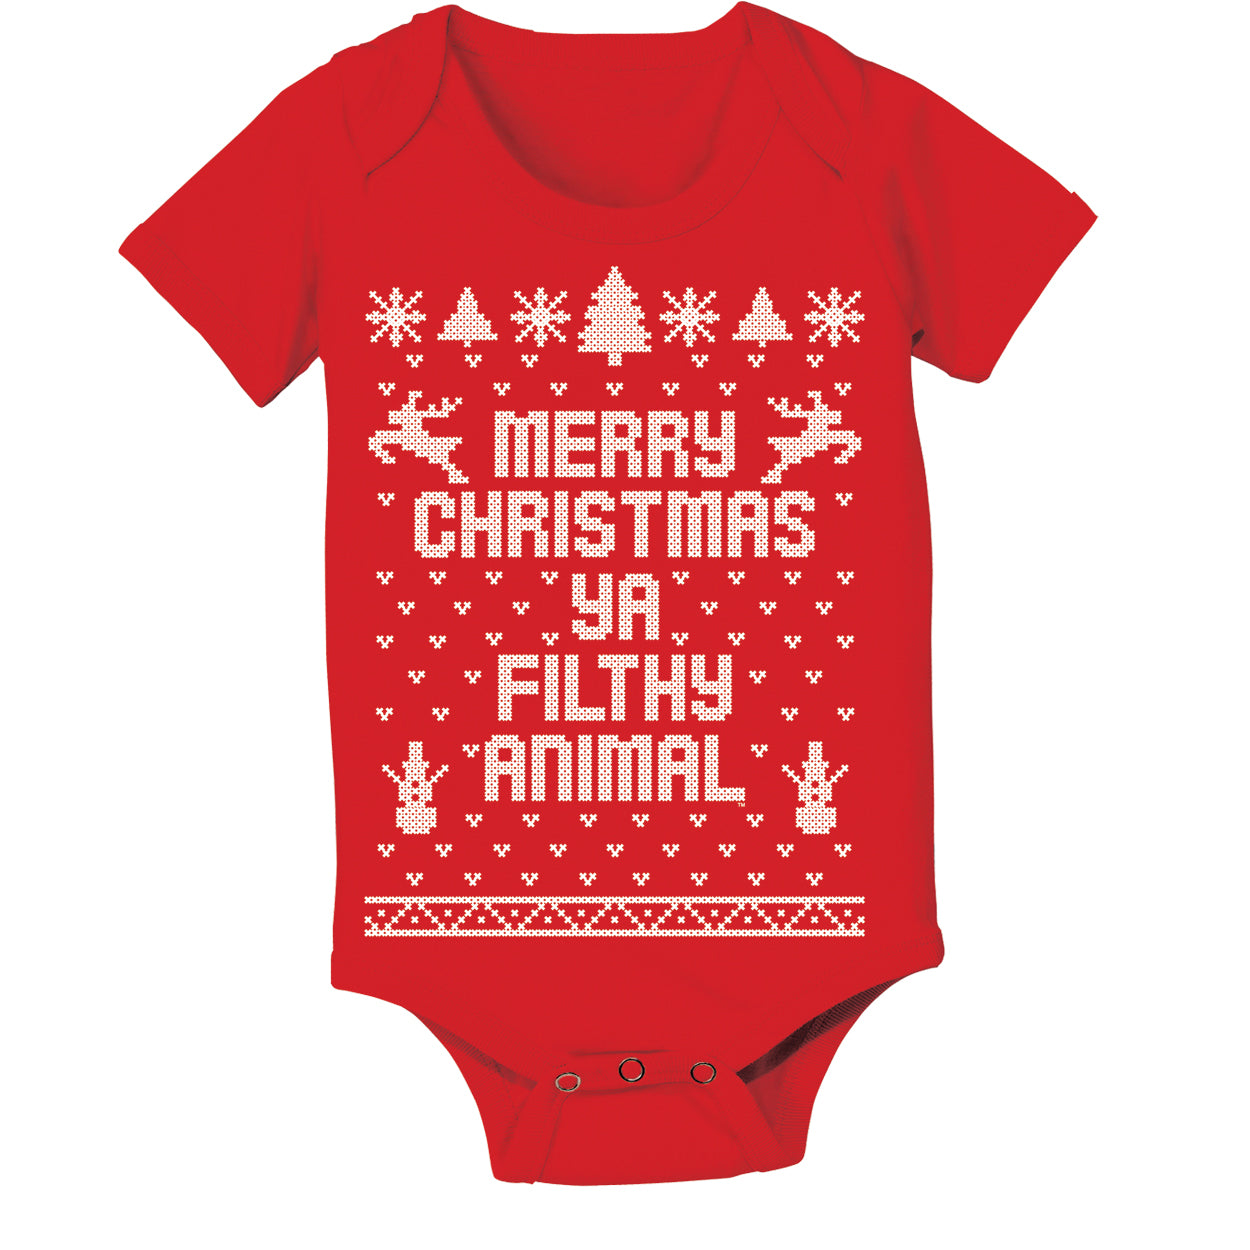 Merry Christmas Ya Filthy Animal Baby Tshirt - Donkey Tees